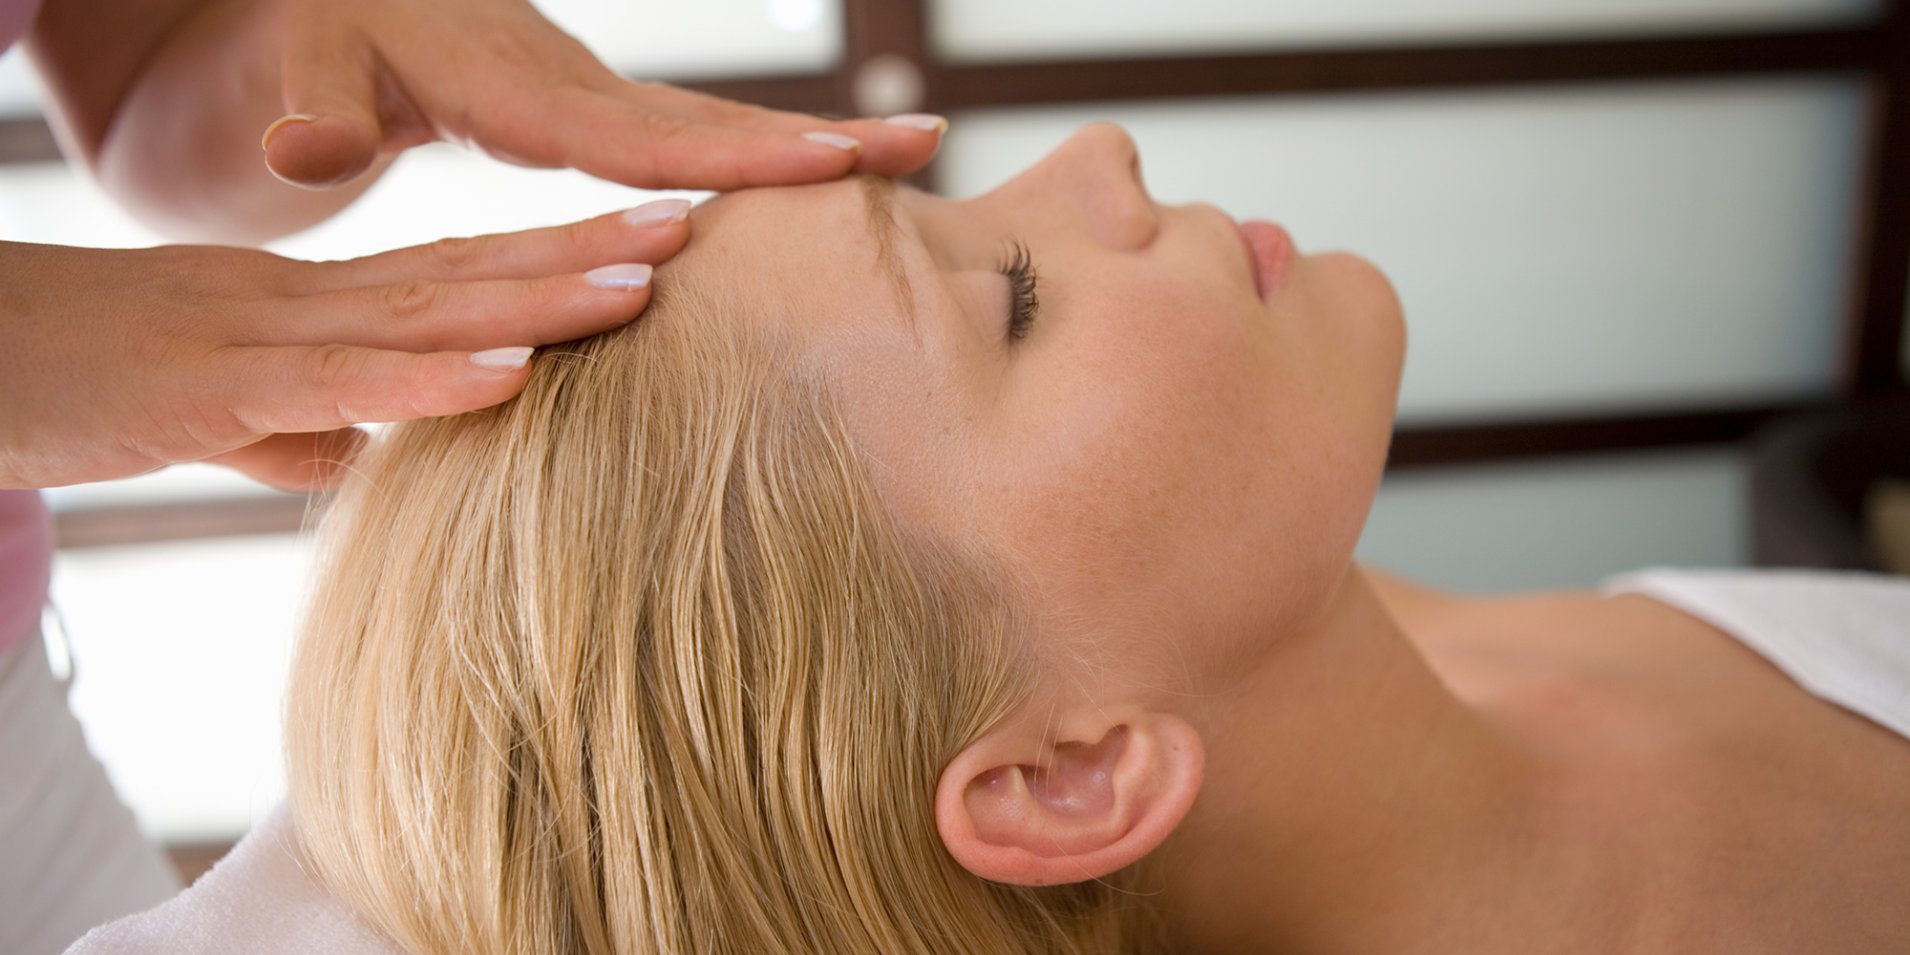 Wellnesshotel Zentral Beautyfarm head massage